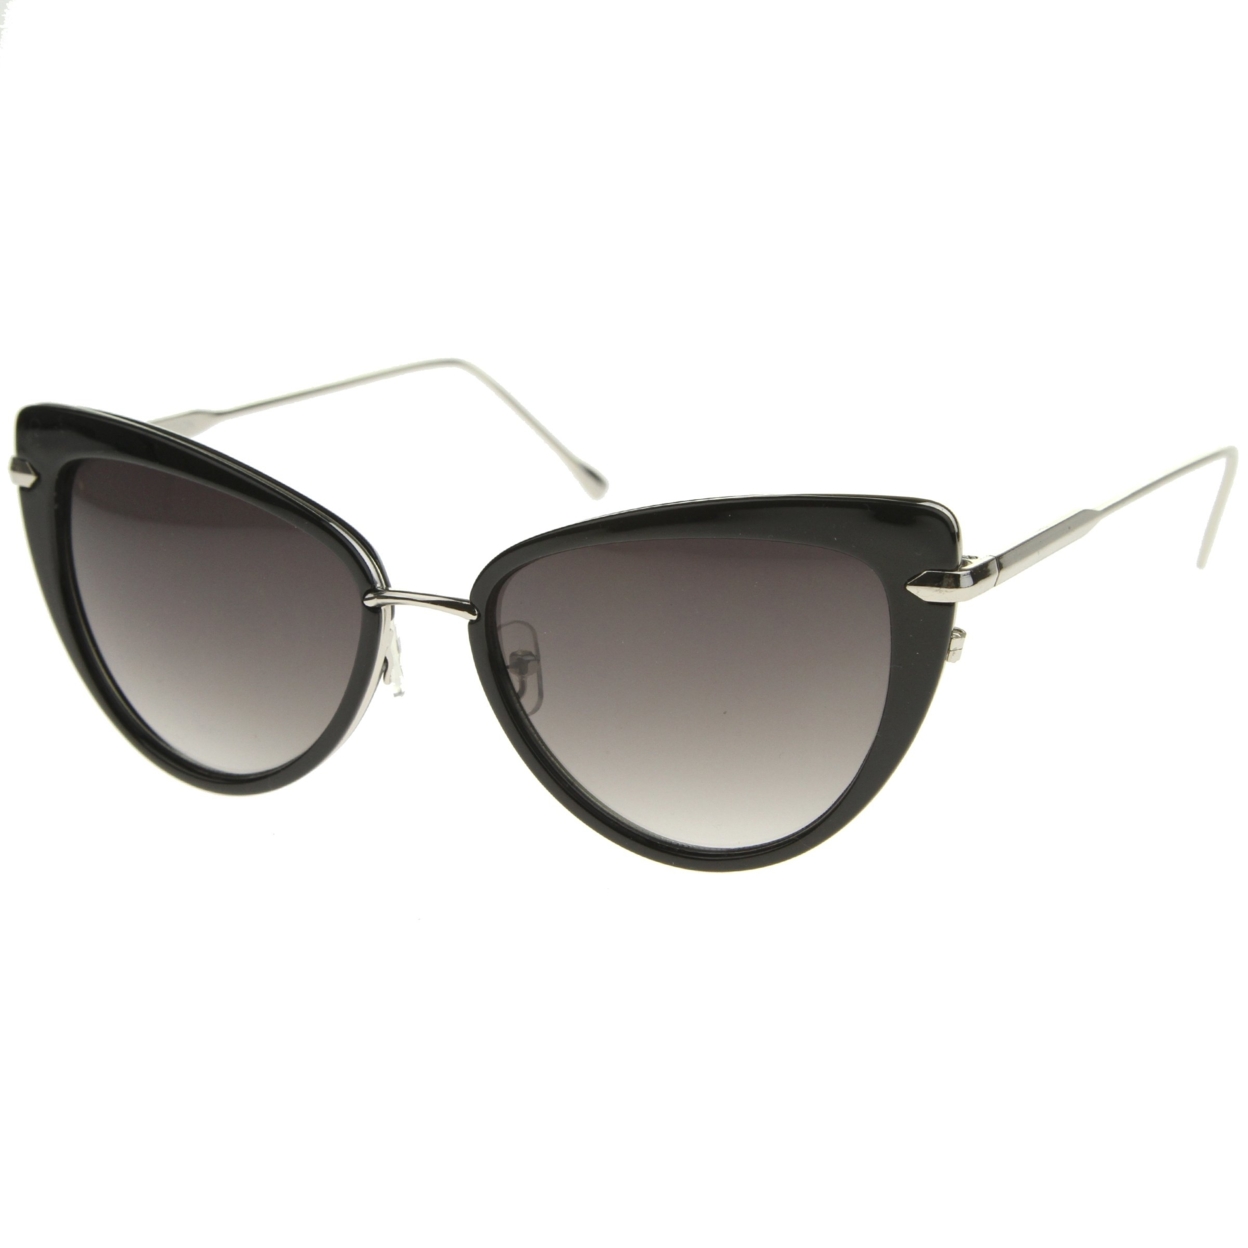 Women's Glam High Fashion Ultra Thin Metal Temple Cat Eye Sunglasses 55mm - Black-Gold / Smoke